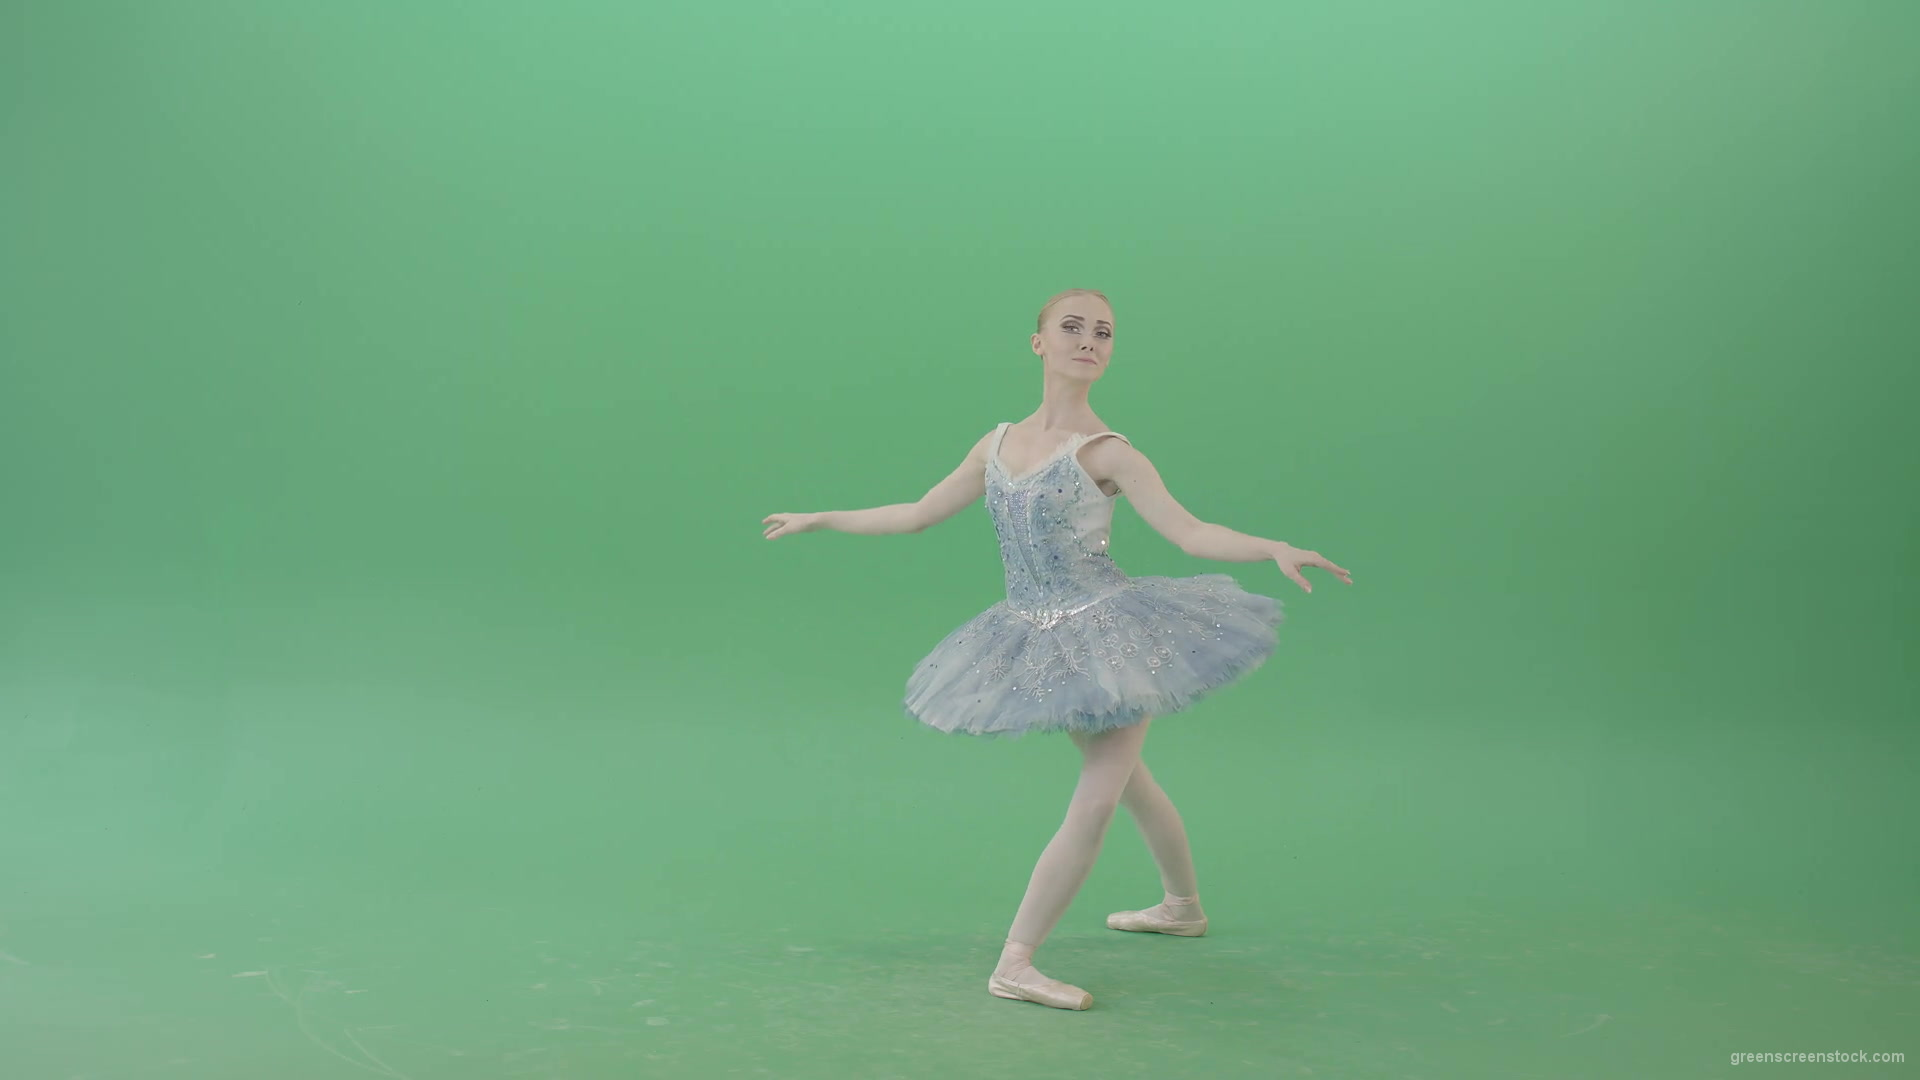 Beauty-blonde-ballerin-ballet-dancing-girl-in-blue-dress-spinning-over-green-screen-4K-Video-Footag-30fps-1920_009 Green Screen Stock